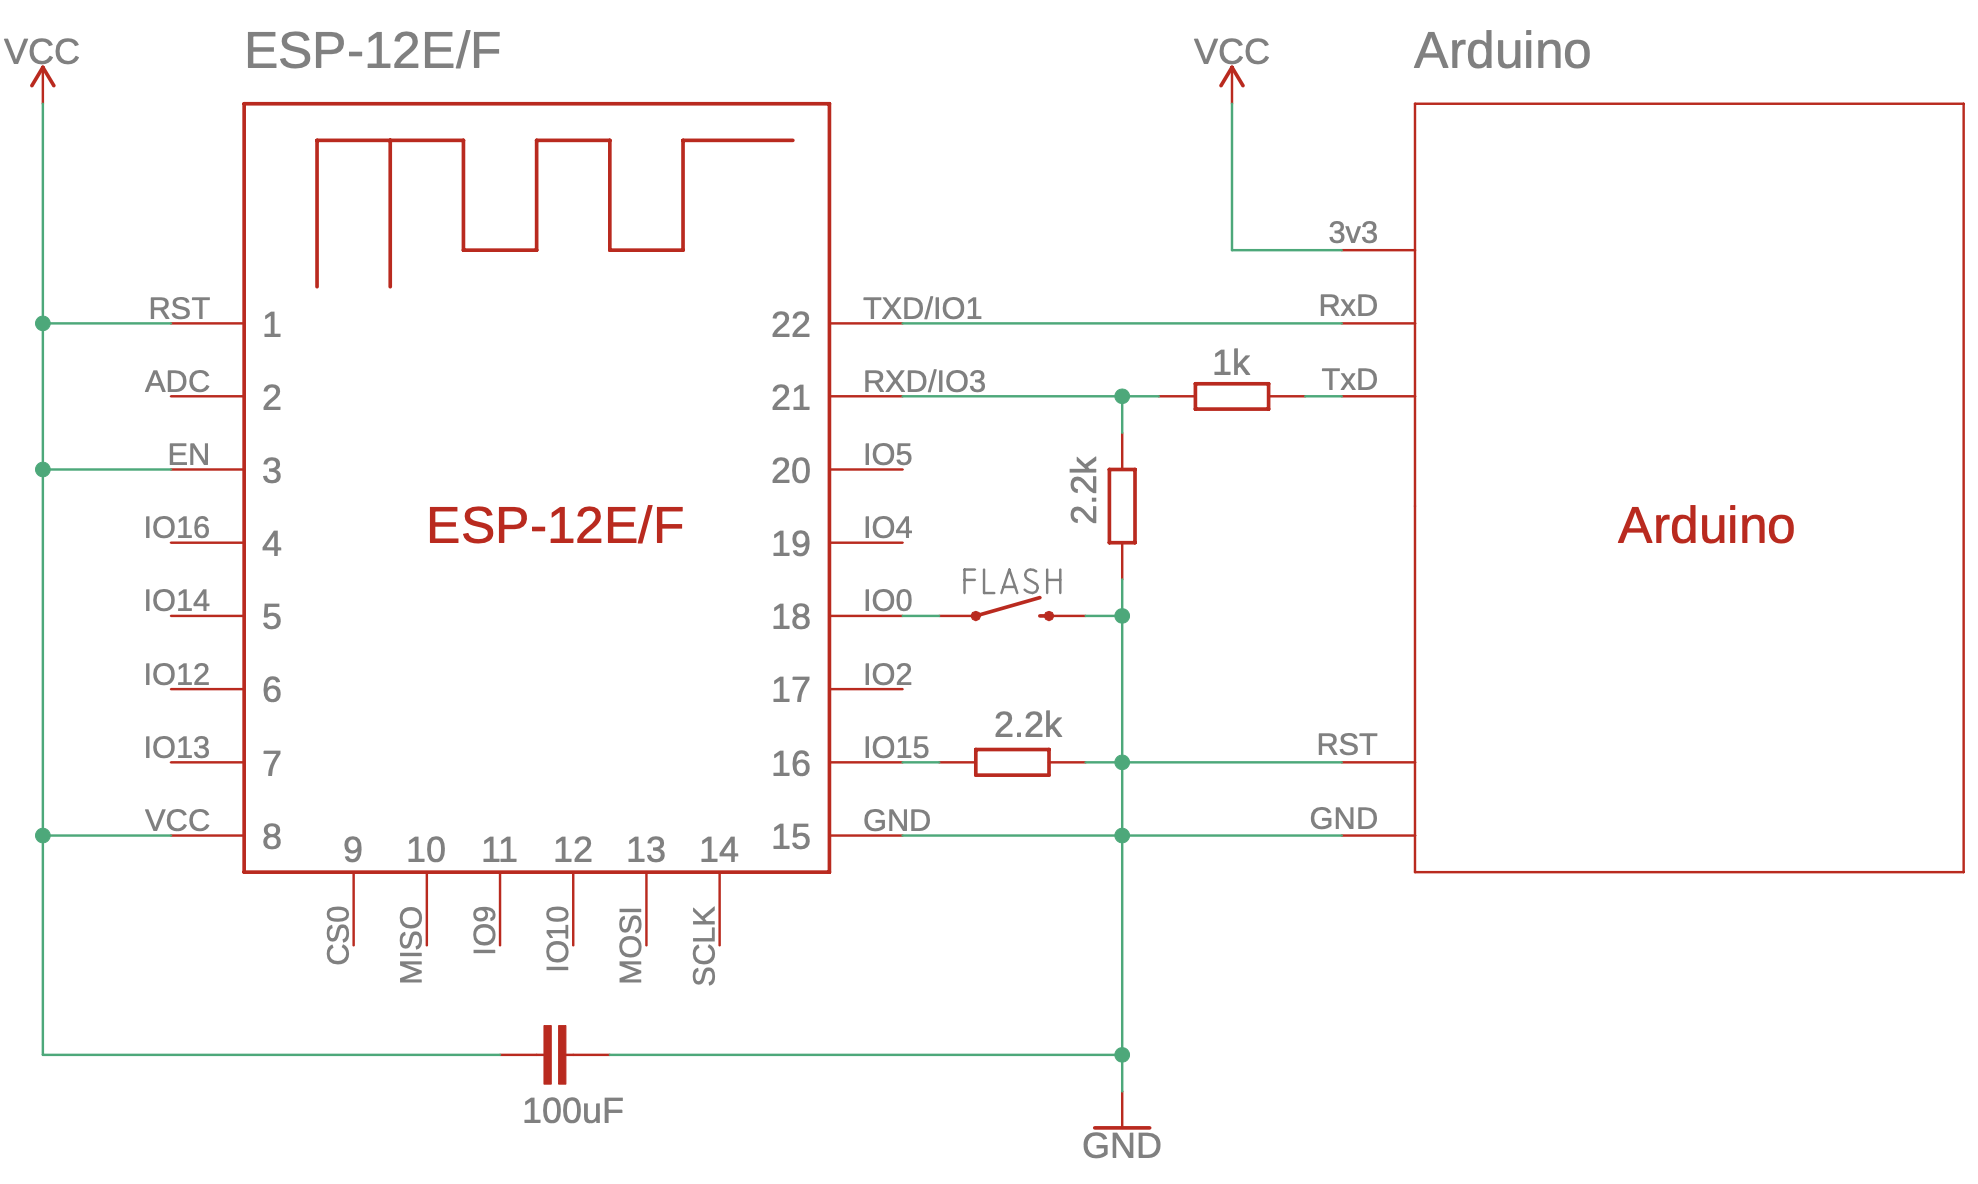 wiring diagram for programming an esp8266 esp-01, esp-07 and esp-12 module with Arduino ide